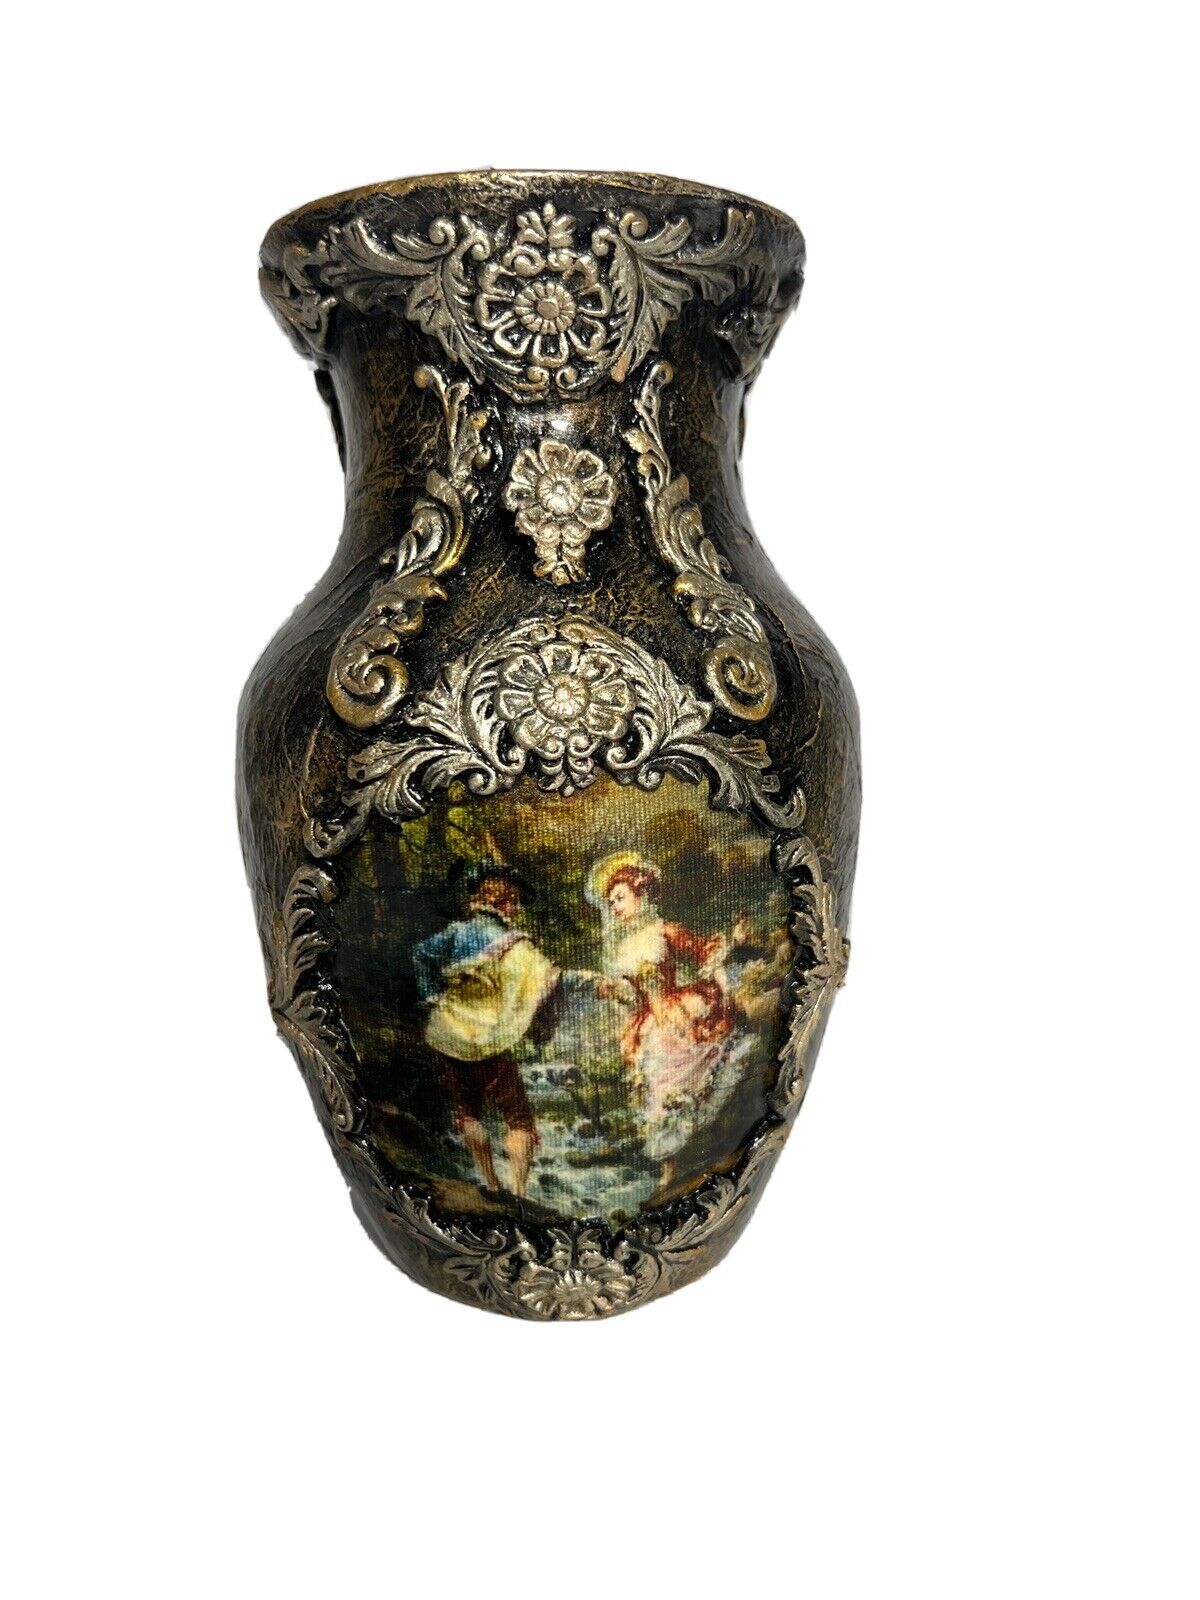 Antique Looking Vase. Handmade. Artist Work. Victorian era. Rare Item. Glass